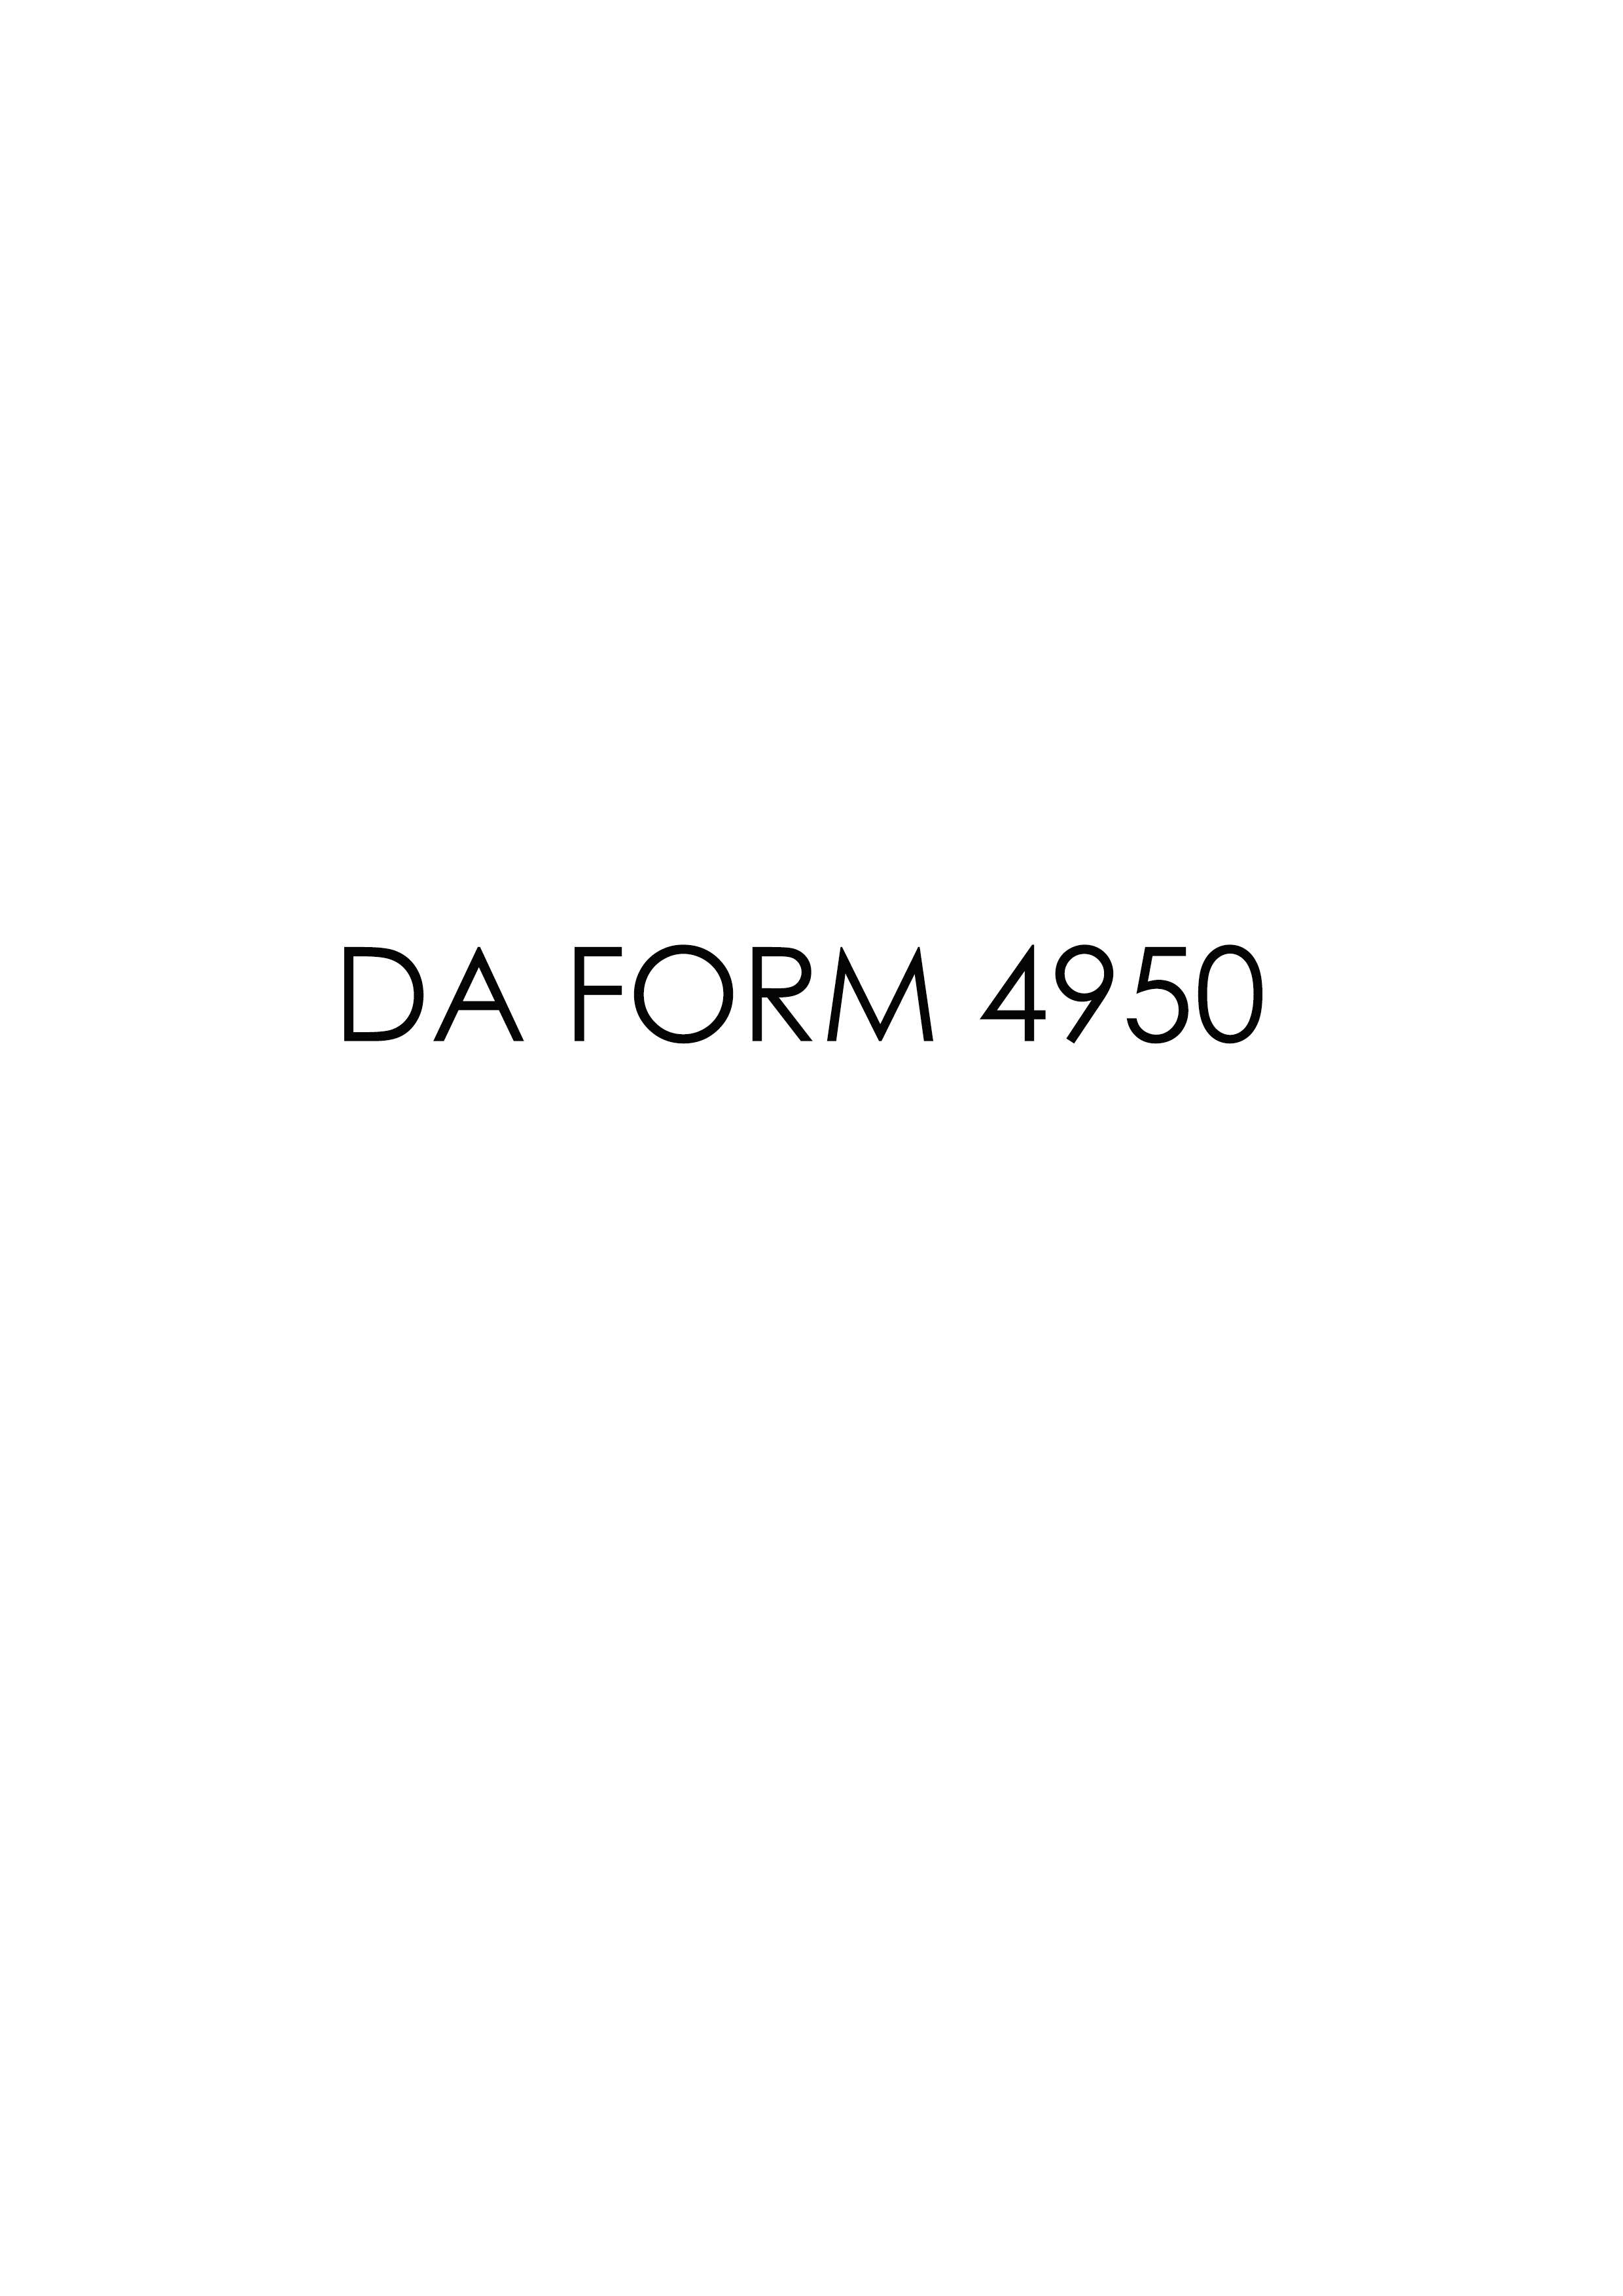 da Form 4950 fillable